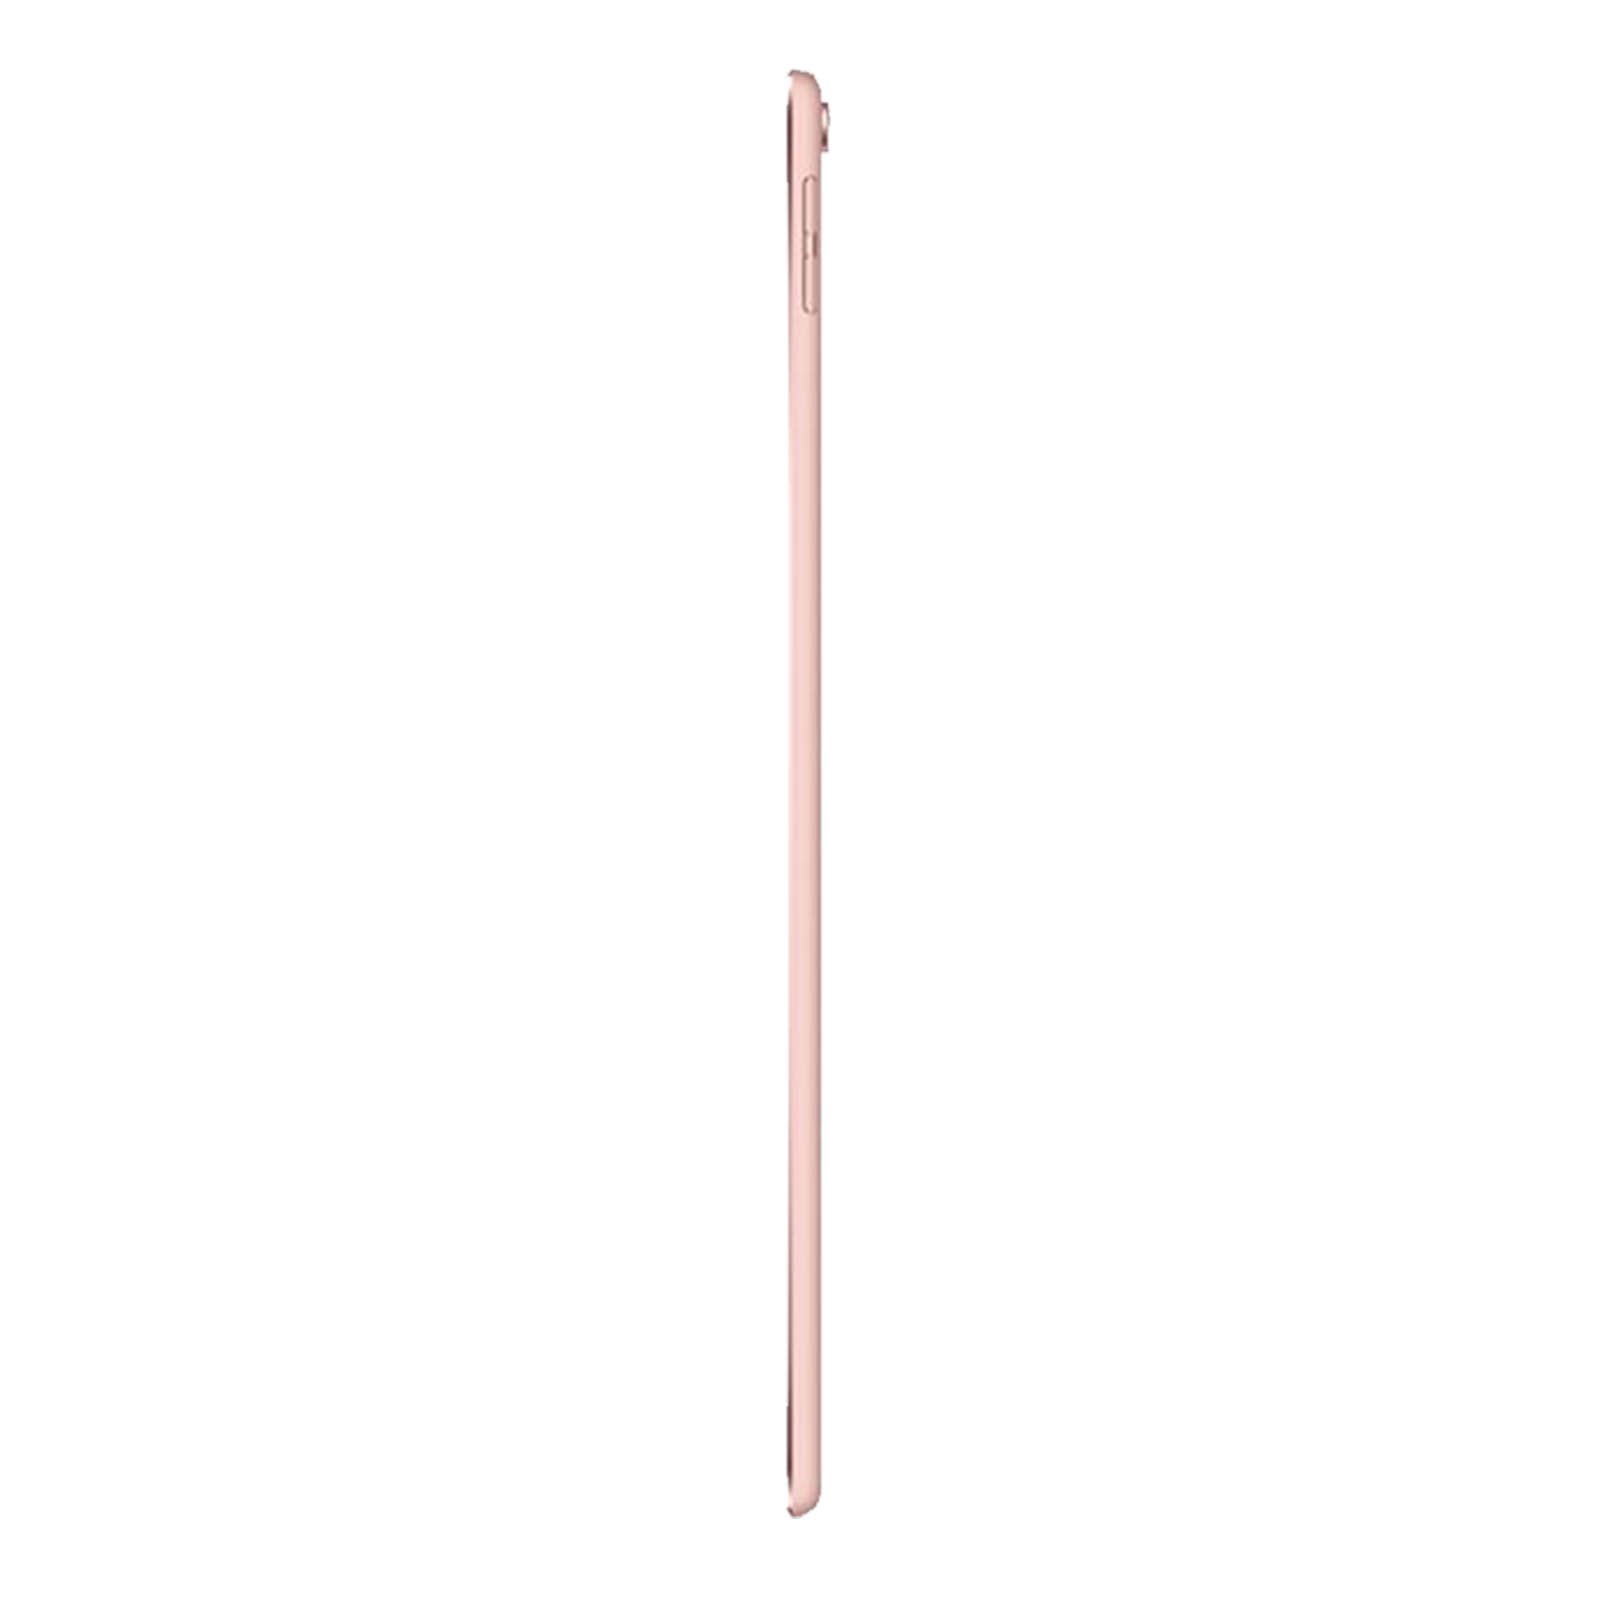 iPad Pro 10.5 Inch 512GB Rose Gold Pristine - Unlocked